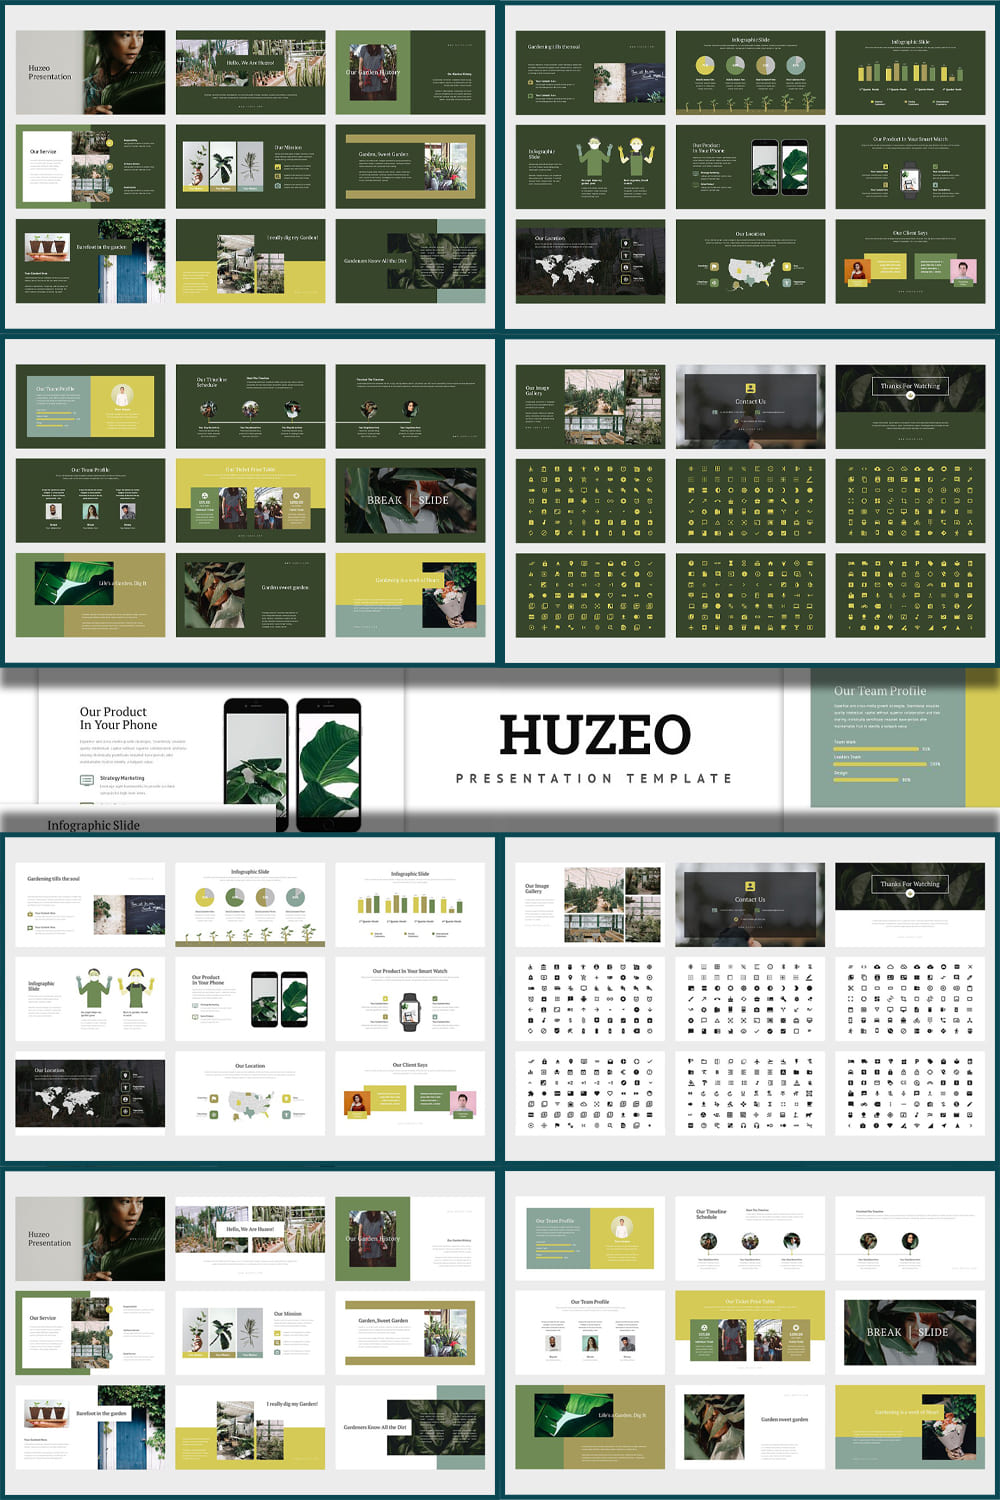 Huzeo: Gardening PowerPoint pinterest image.